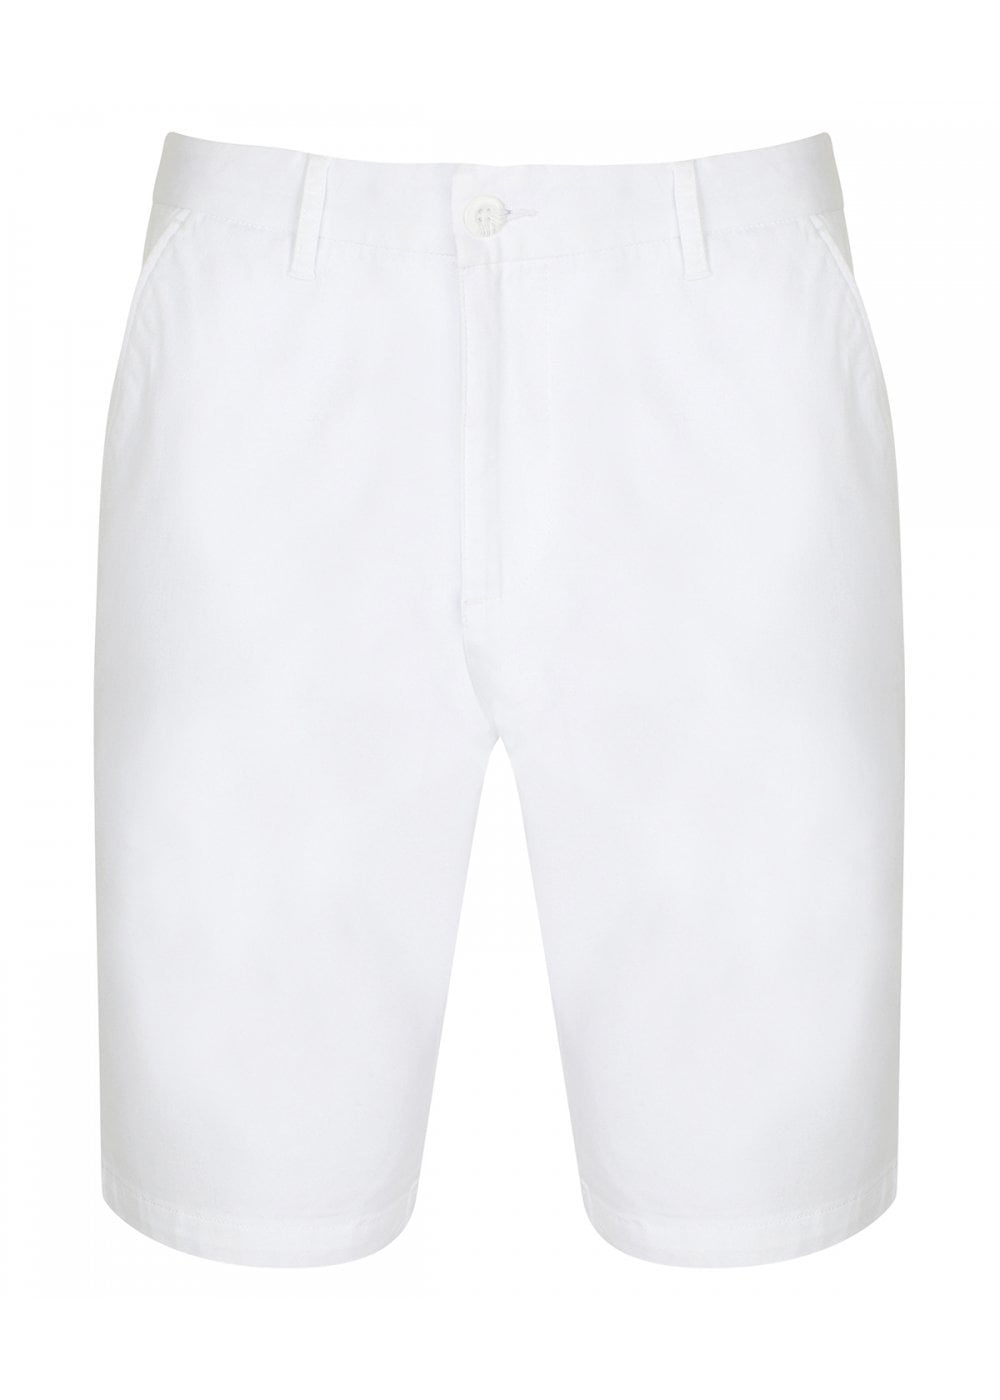 Ladies White Chino Stretch Shorts 34" or 36"